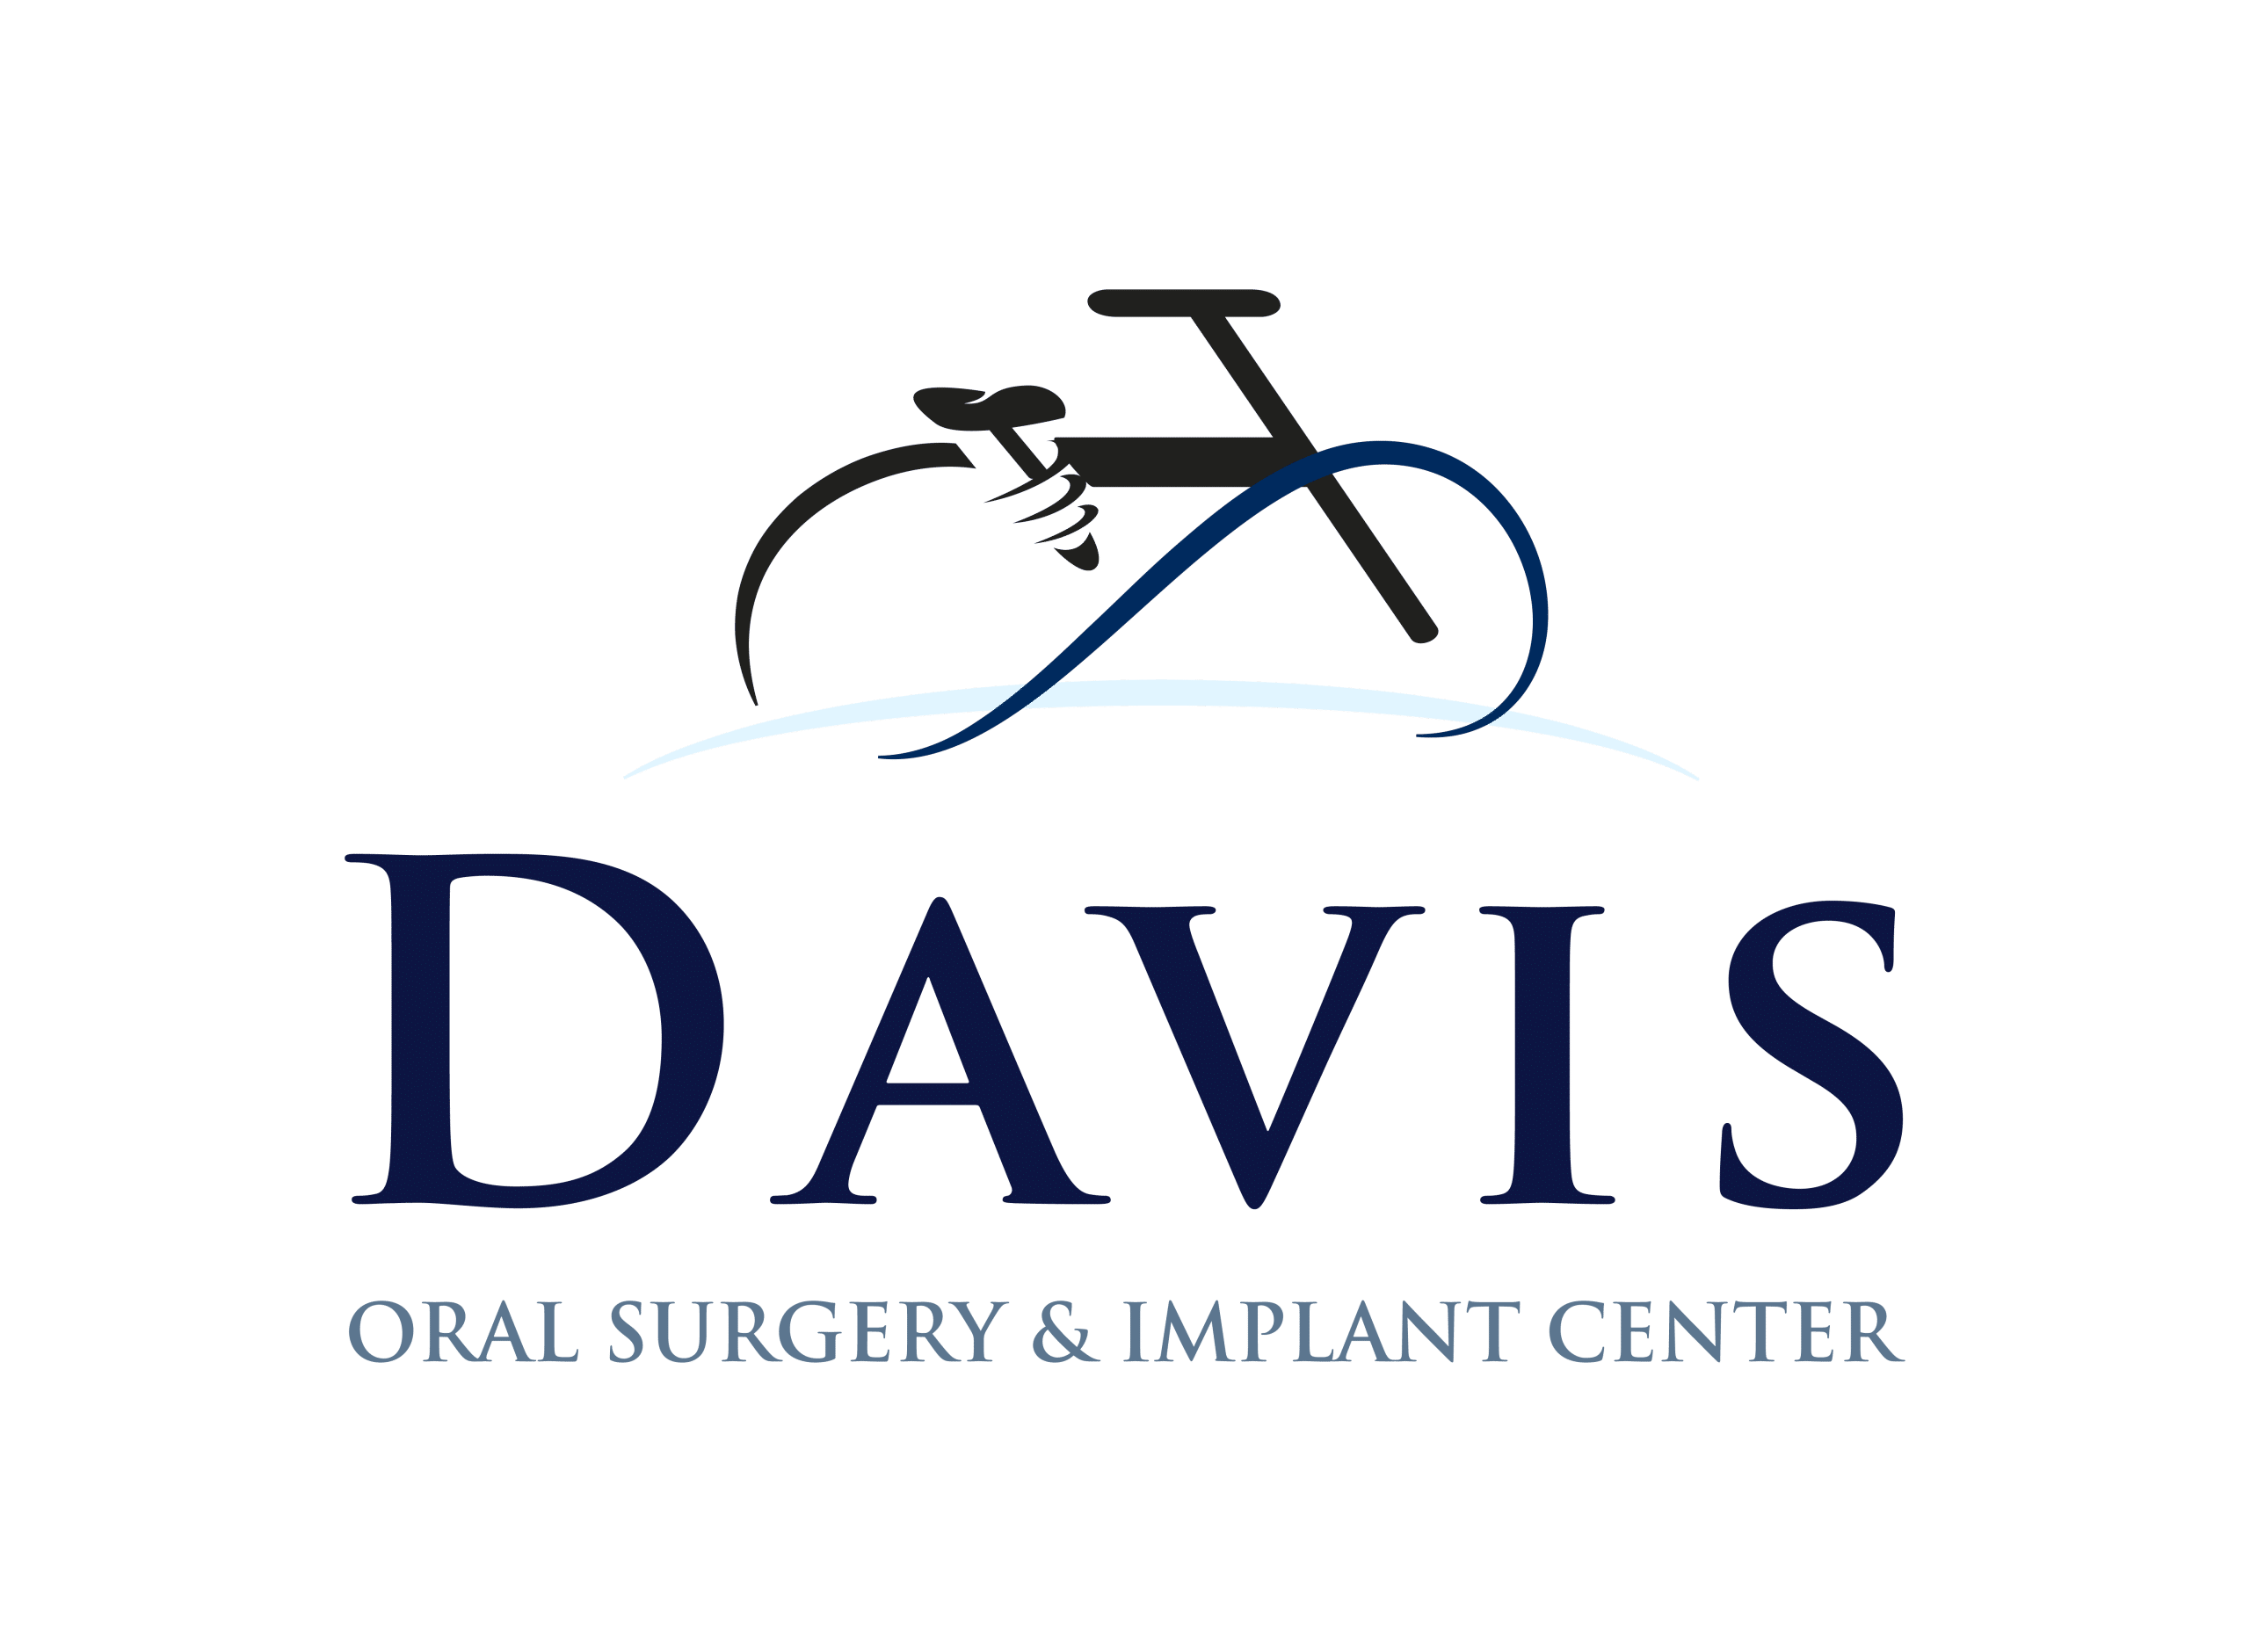 davis oral surgery & implant center logo